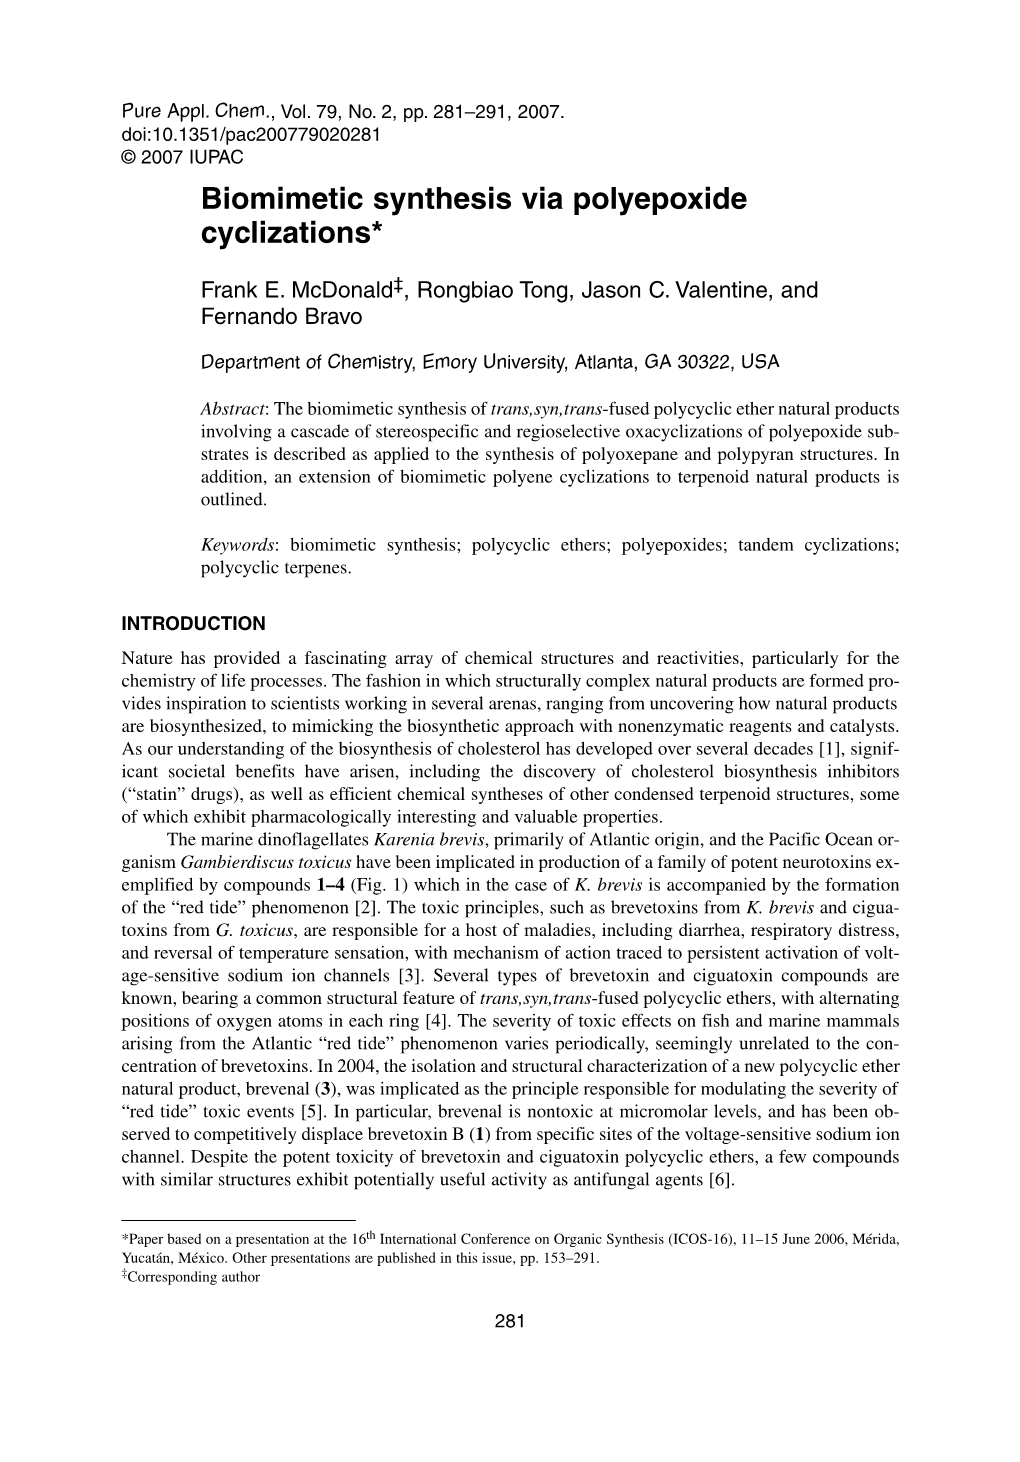 Biomimetic Synthesis Via Polyepoxide Cyclizations*